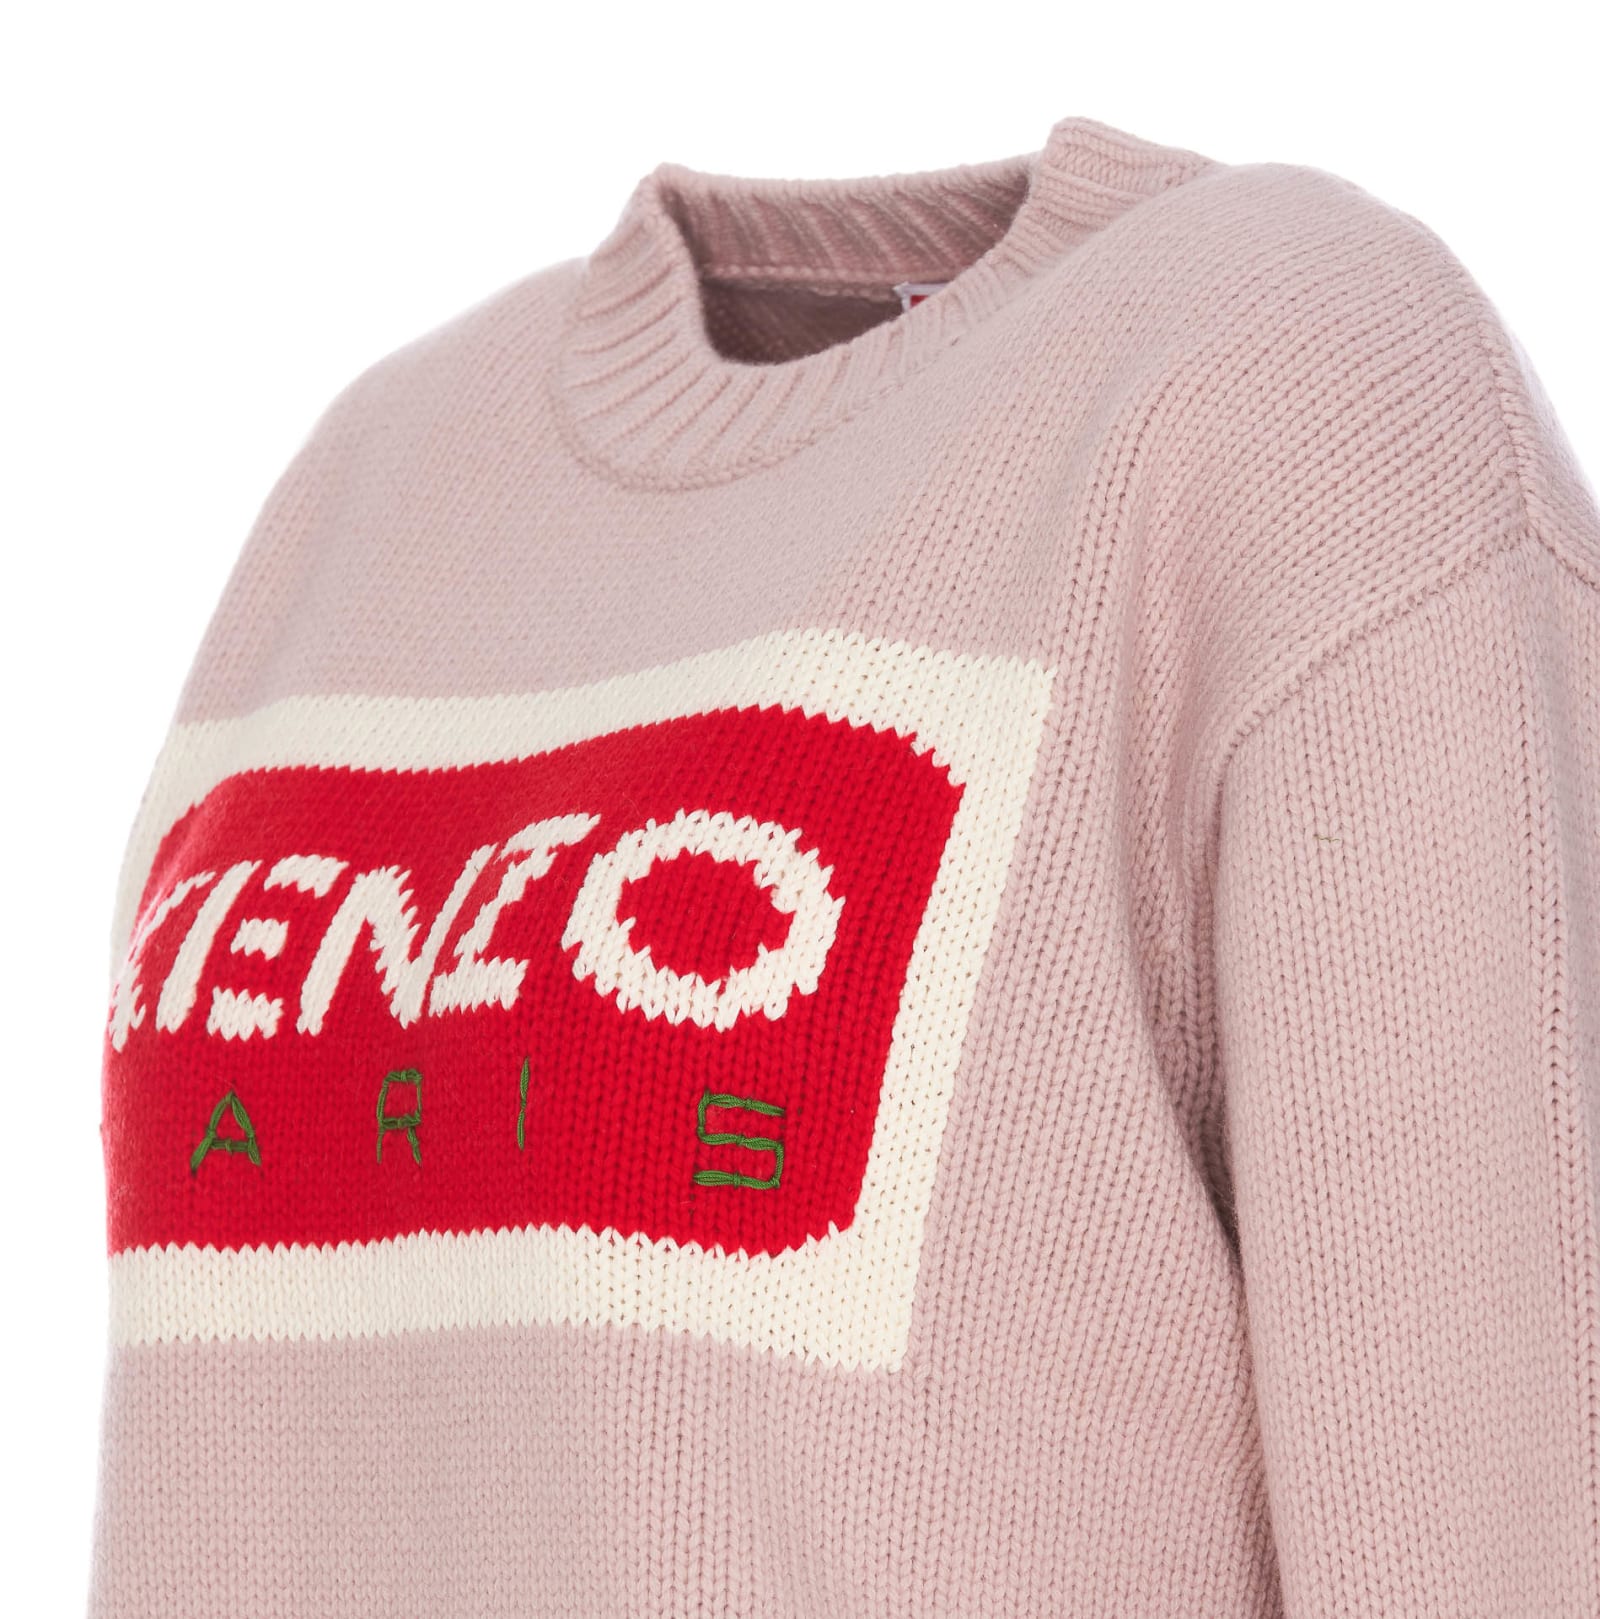 Shop Kenzo Paris Loose Sweater